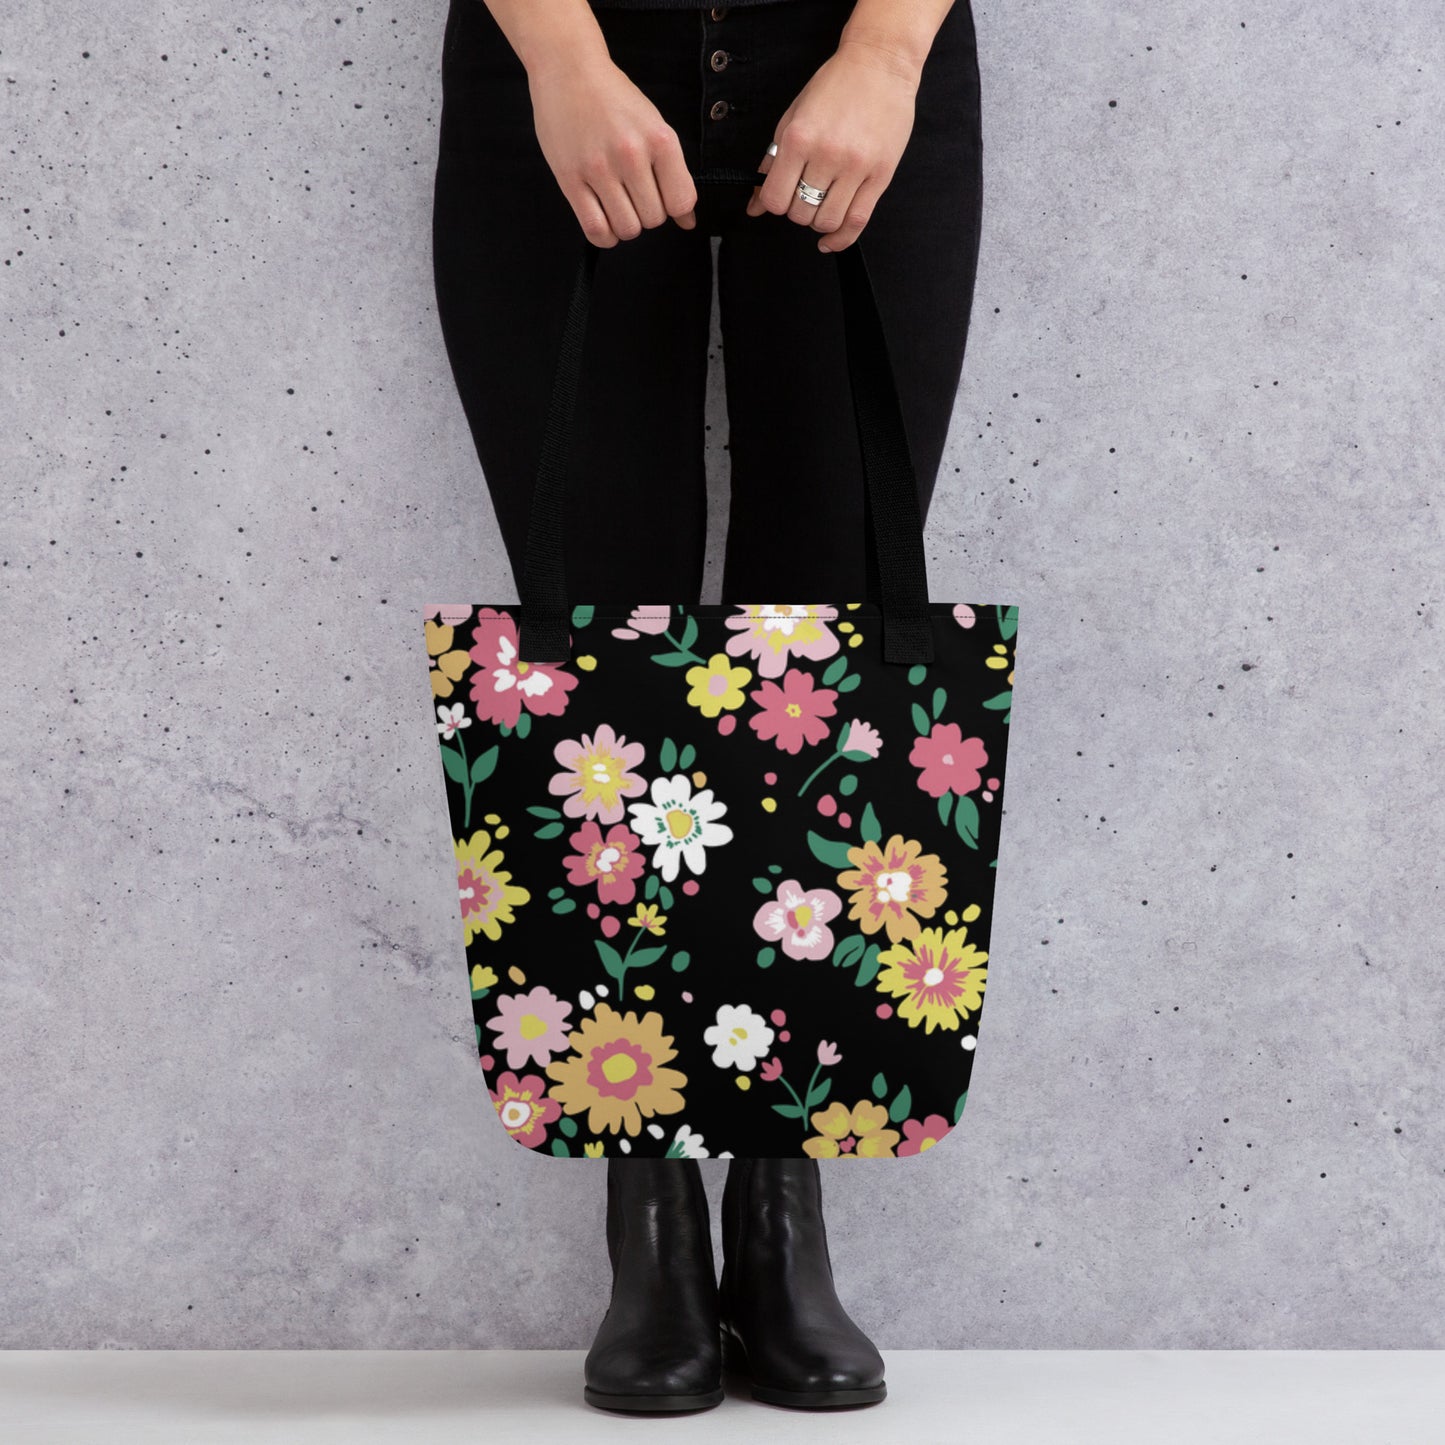 Premium Polyester Tote Bag - Cute Spring Flower Print